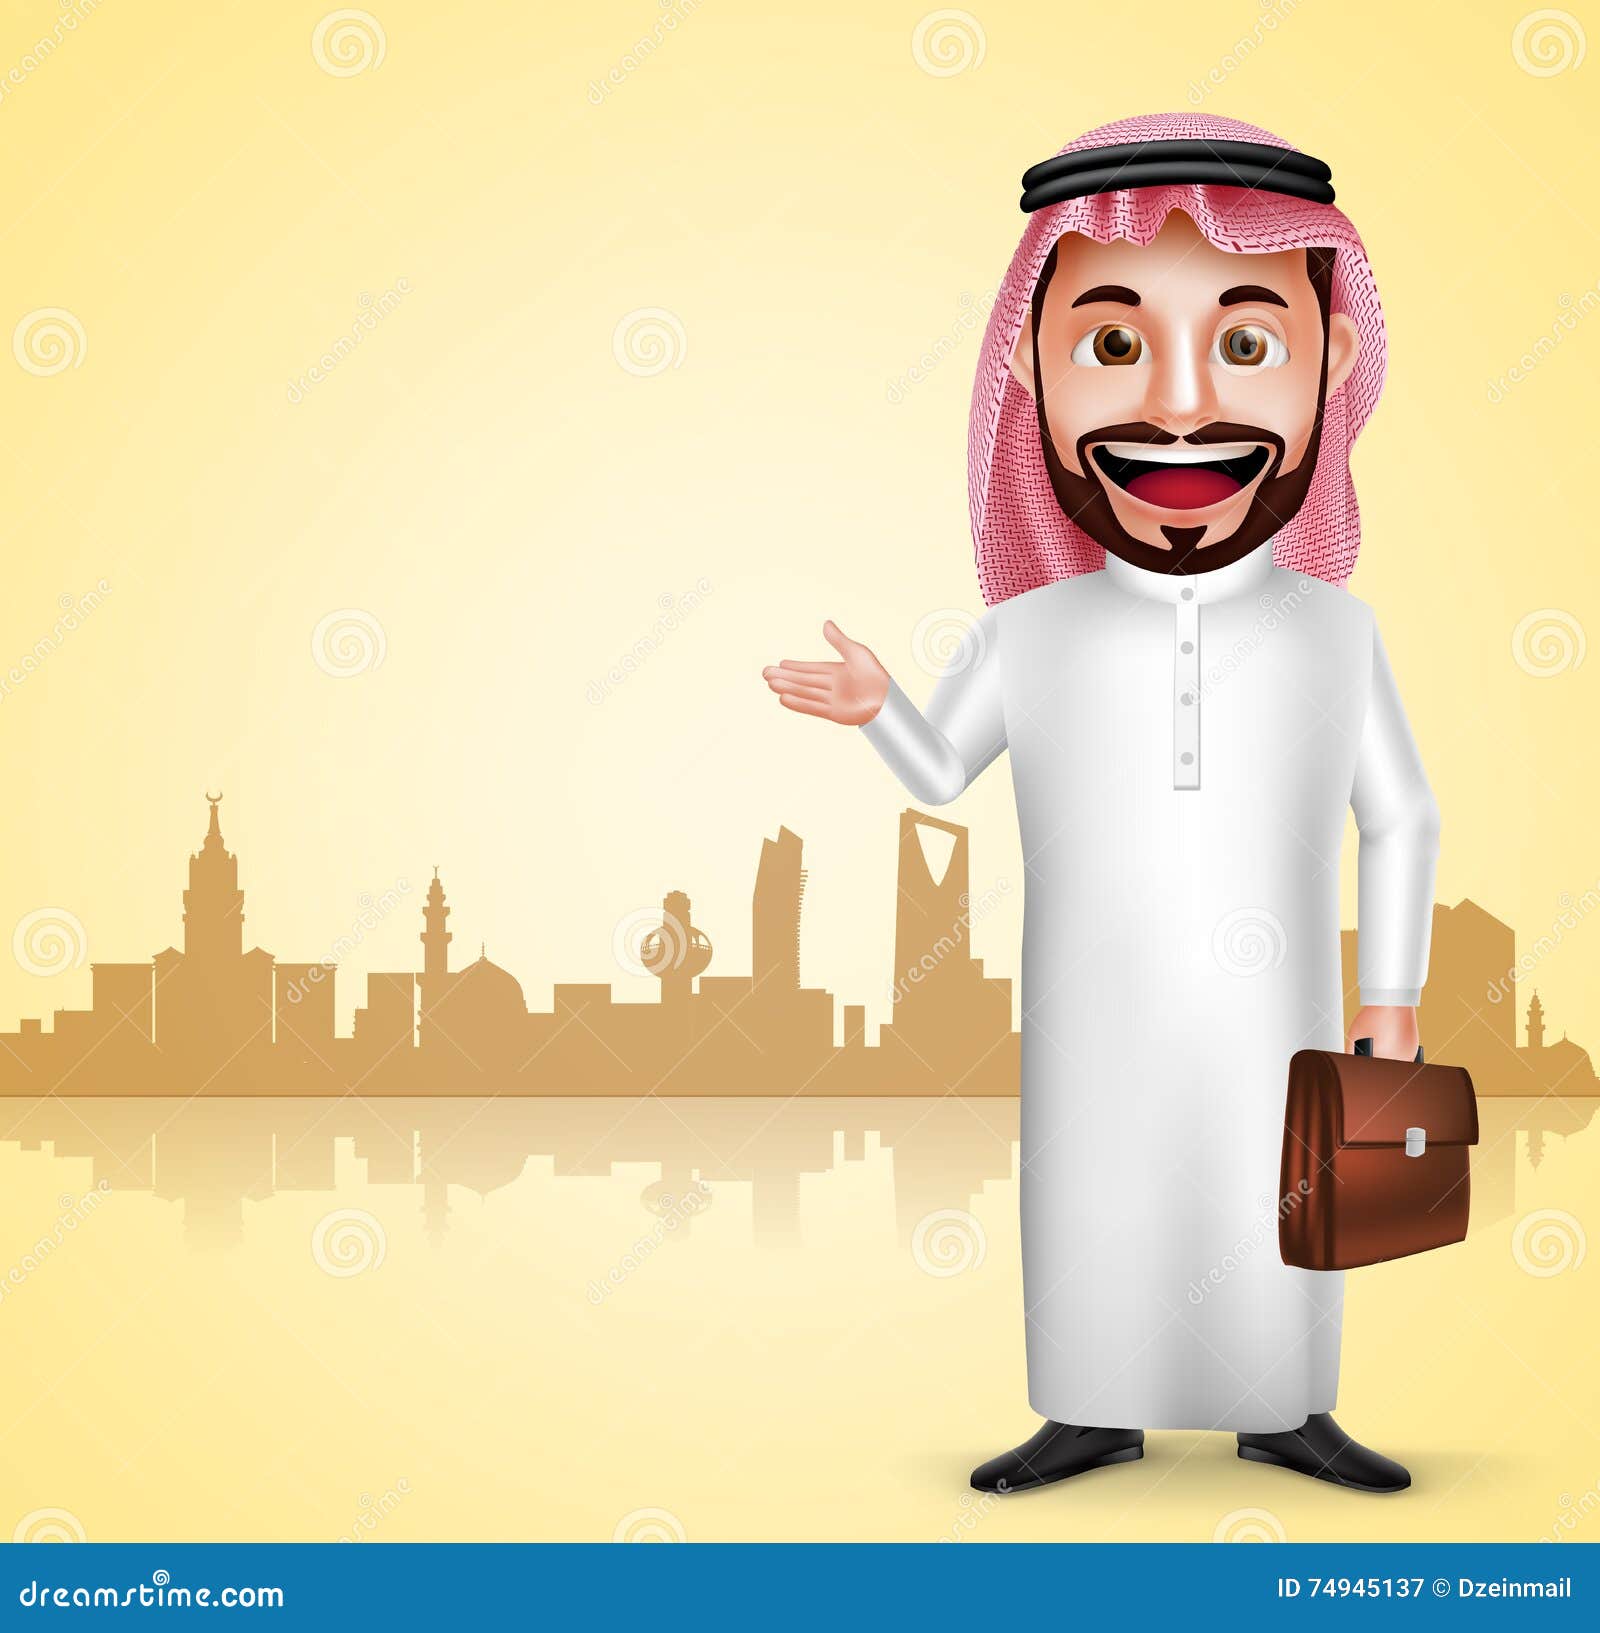 saudi arab man  character wearing thobe showing city landmark